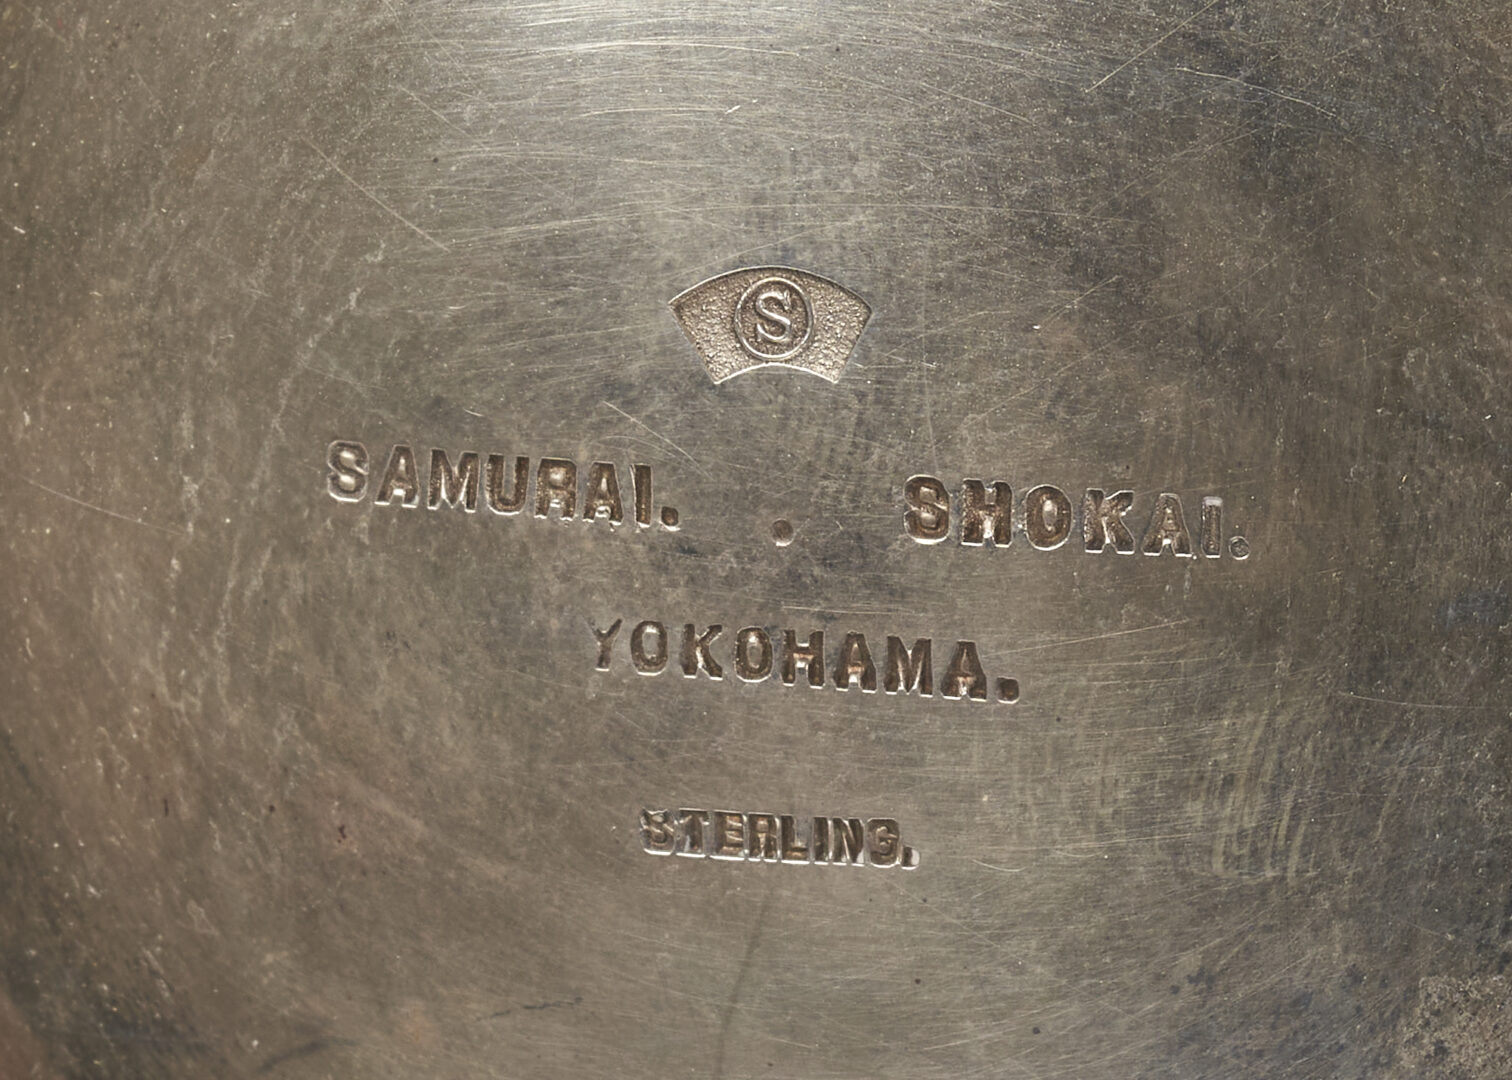 Lot 1: 8 Japanese Export Sterling Bowls, Samurai Shokai